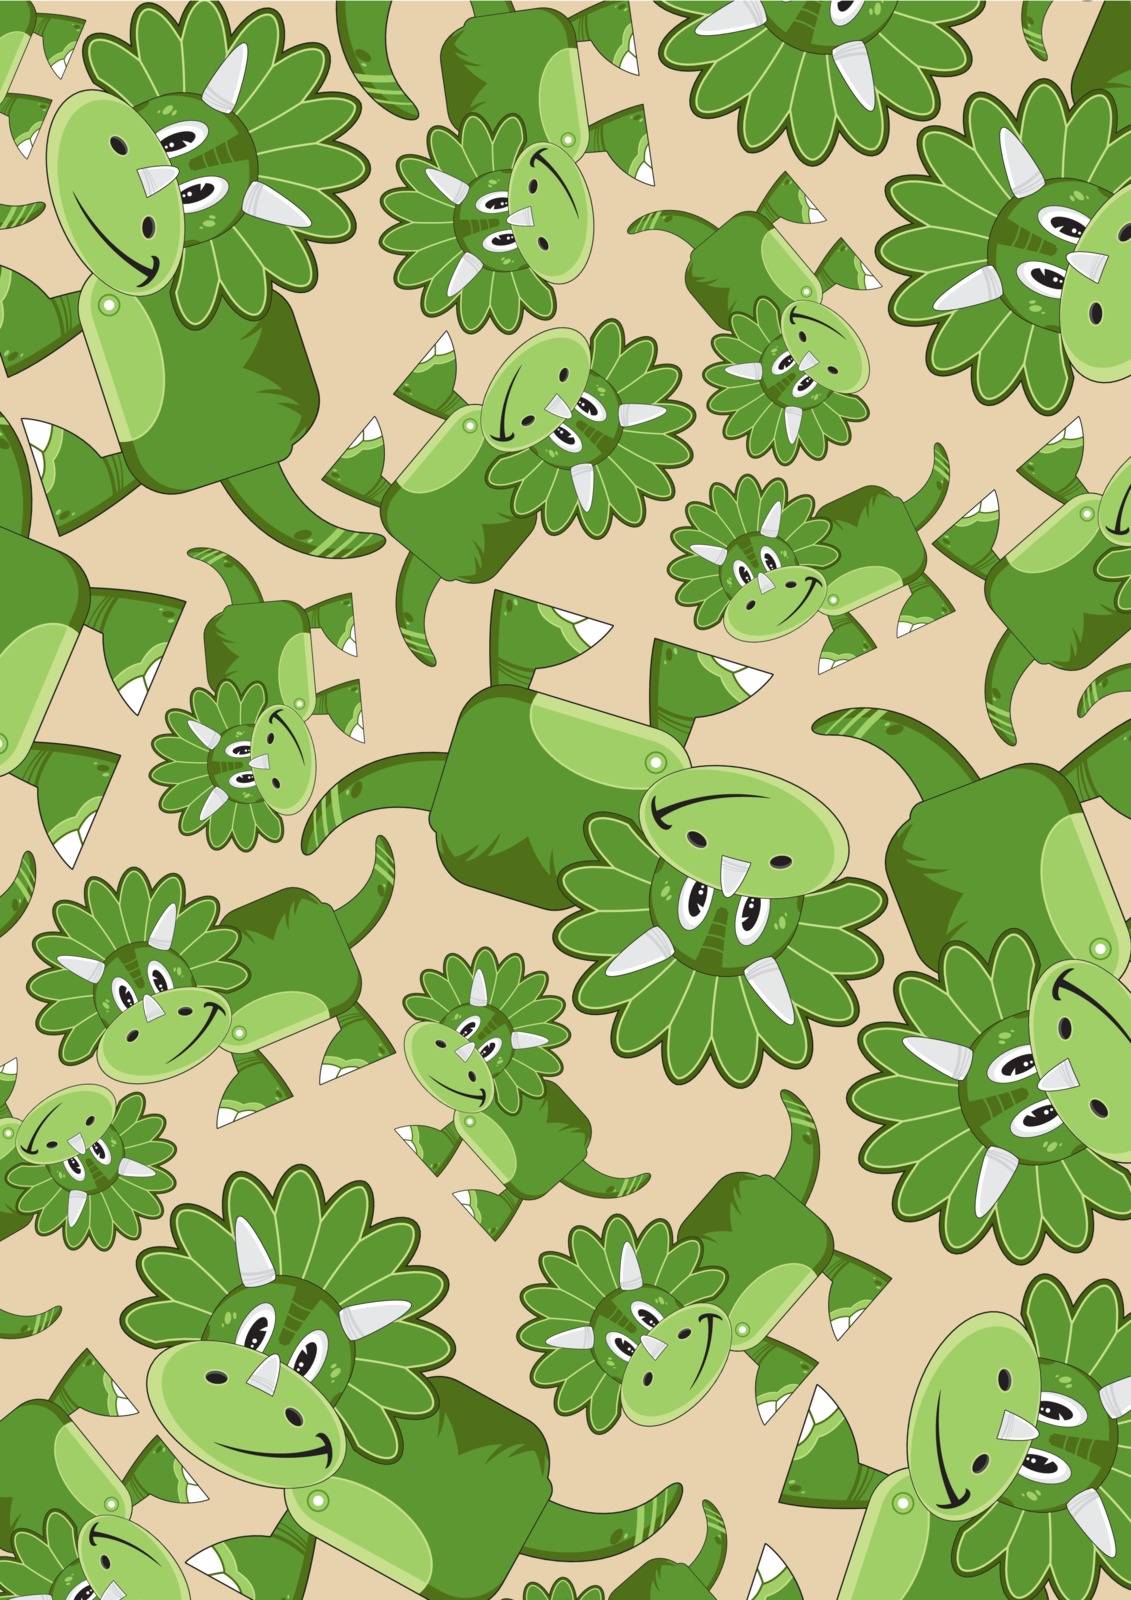 Cute Cartoon Triceratops Dinosaur Pattern by markmurphycreative